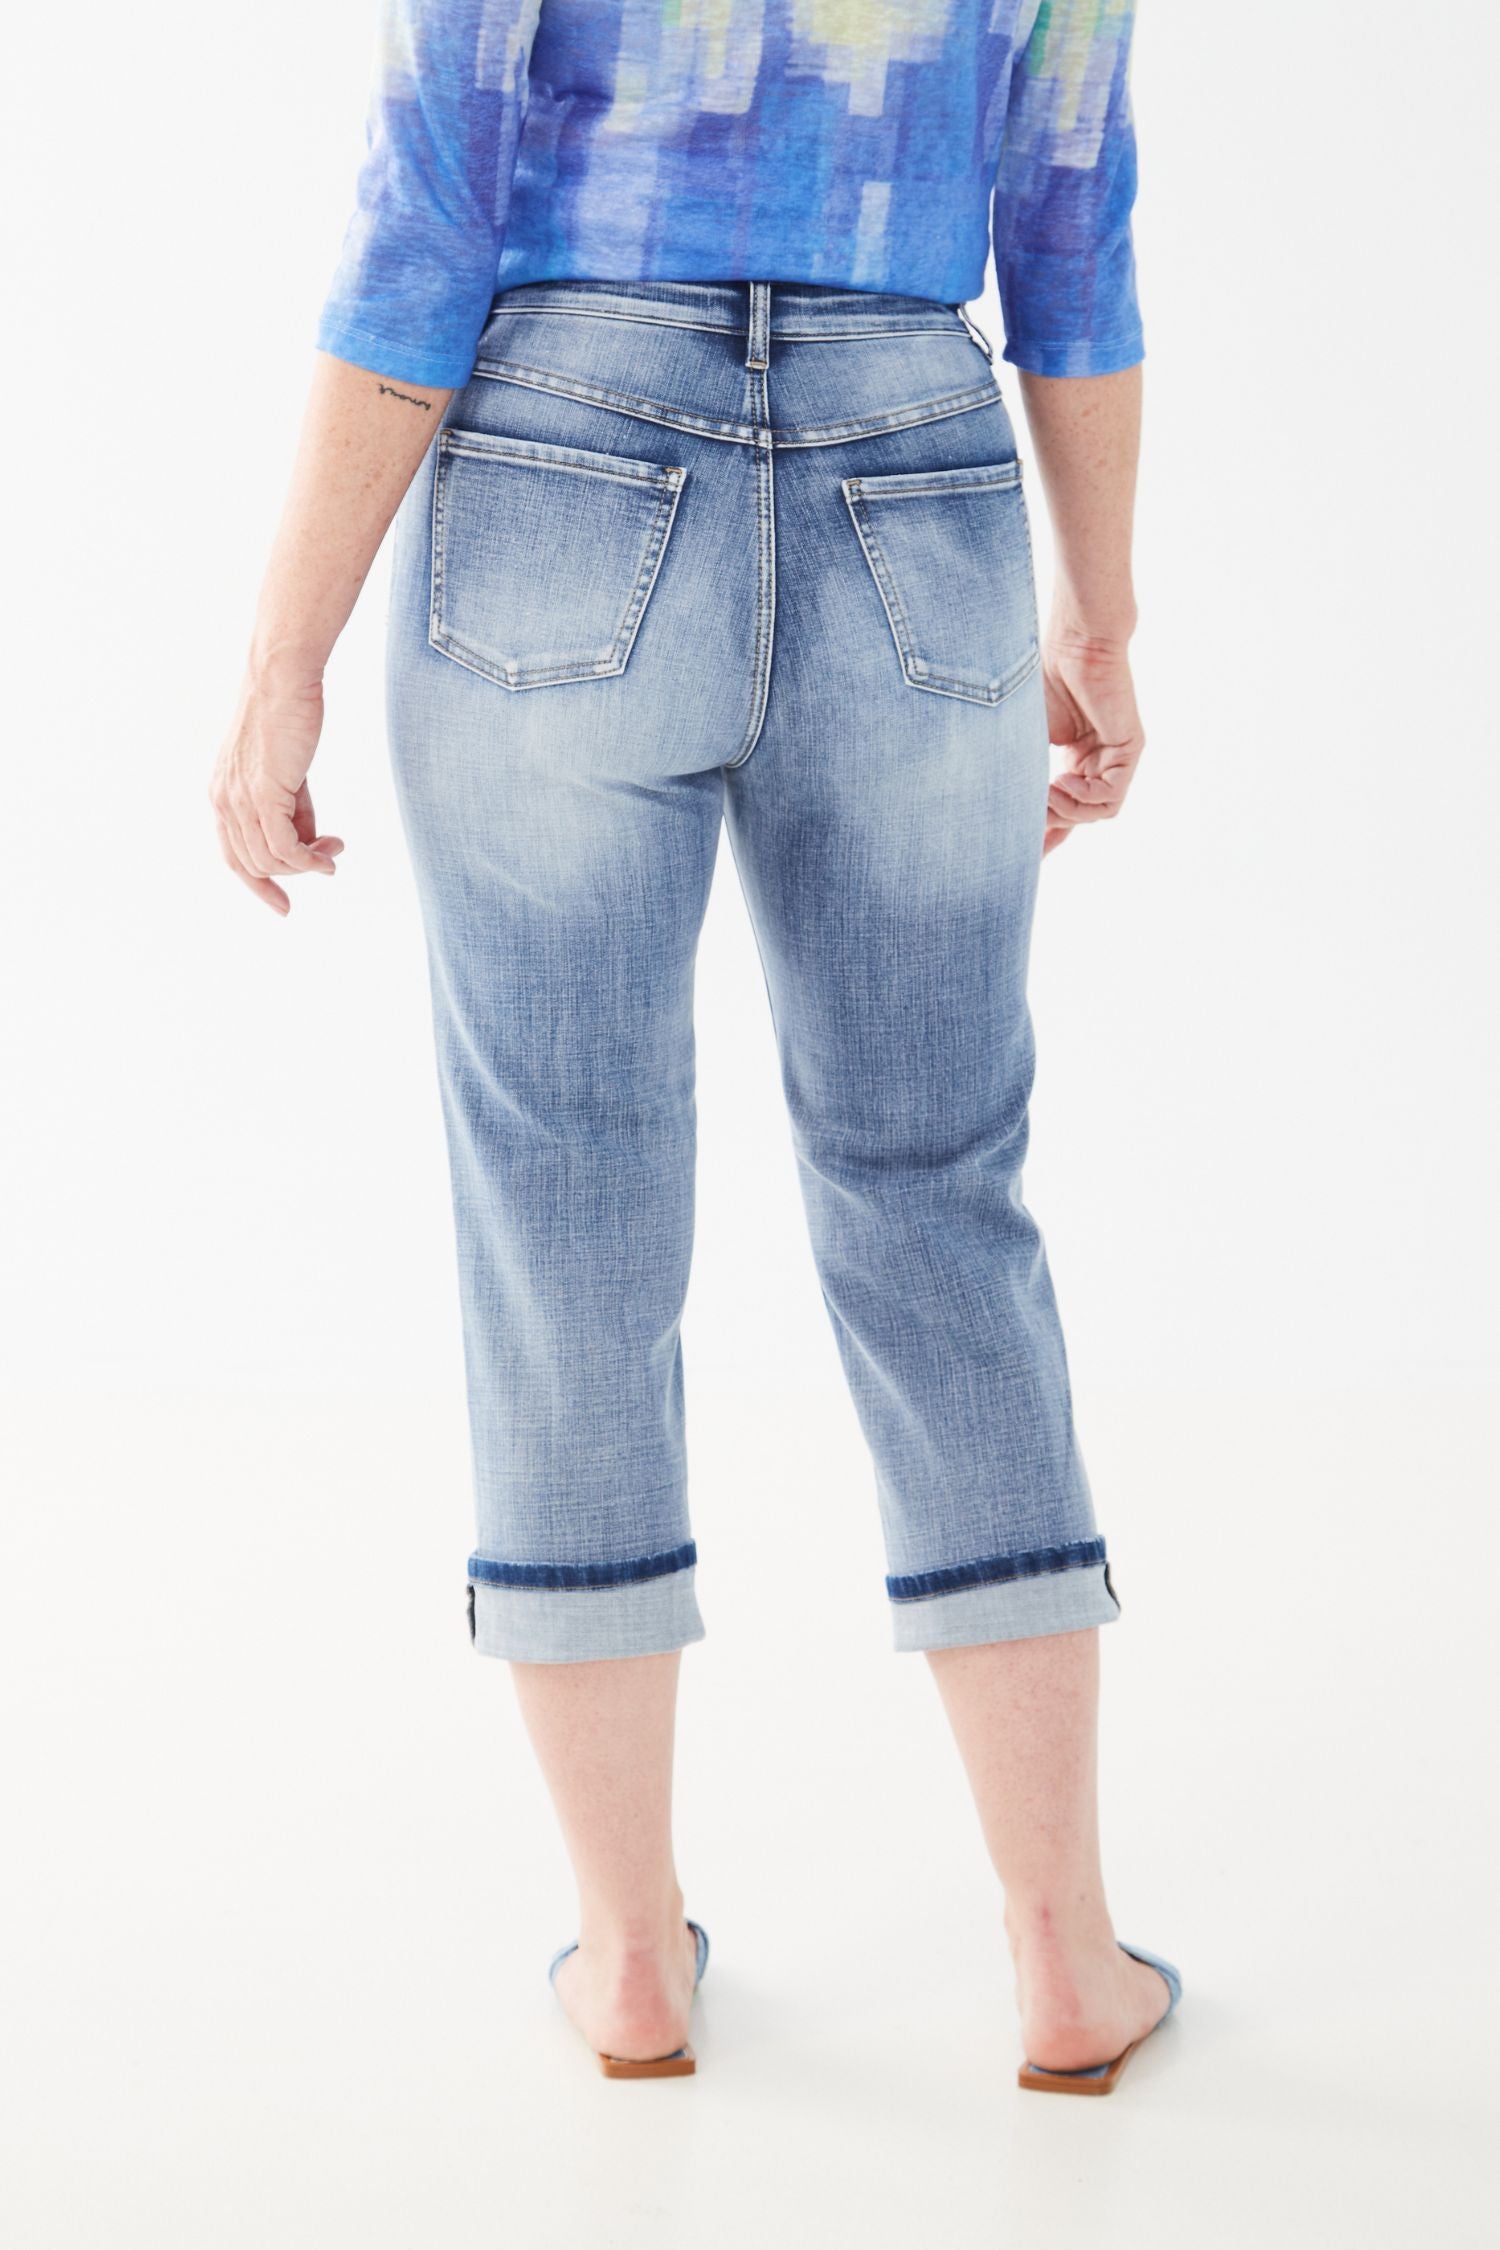 FDJ Suzanne Capri Jeans - Style 6816809, back